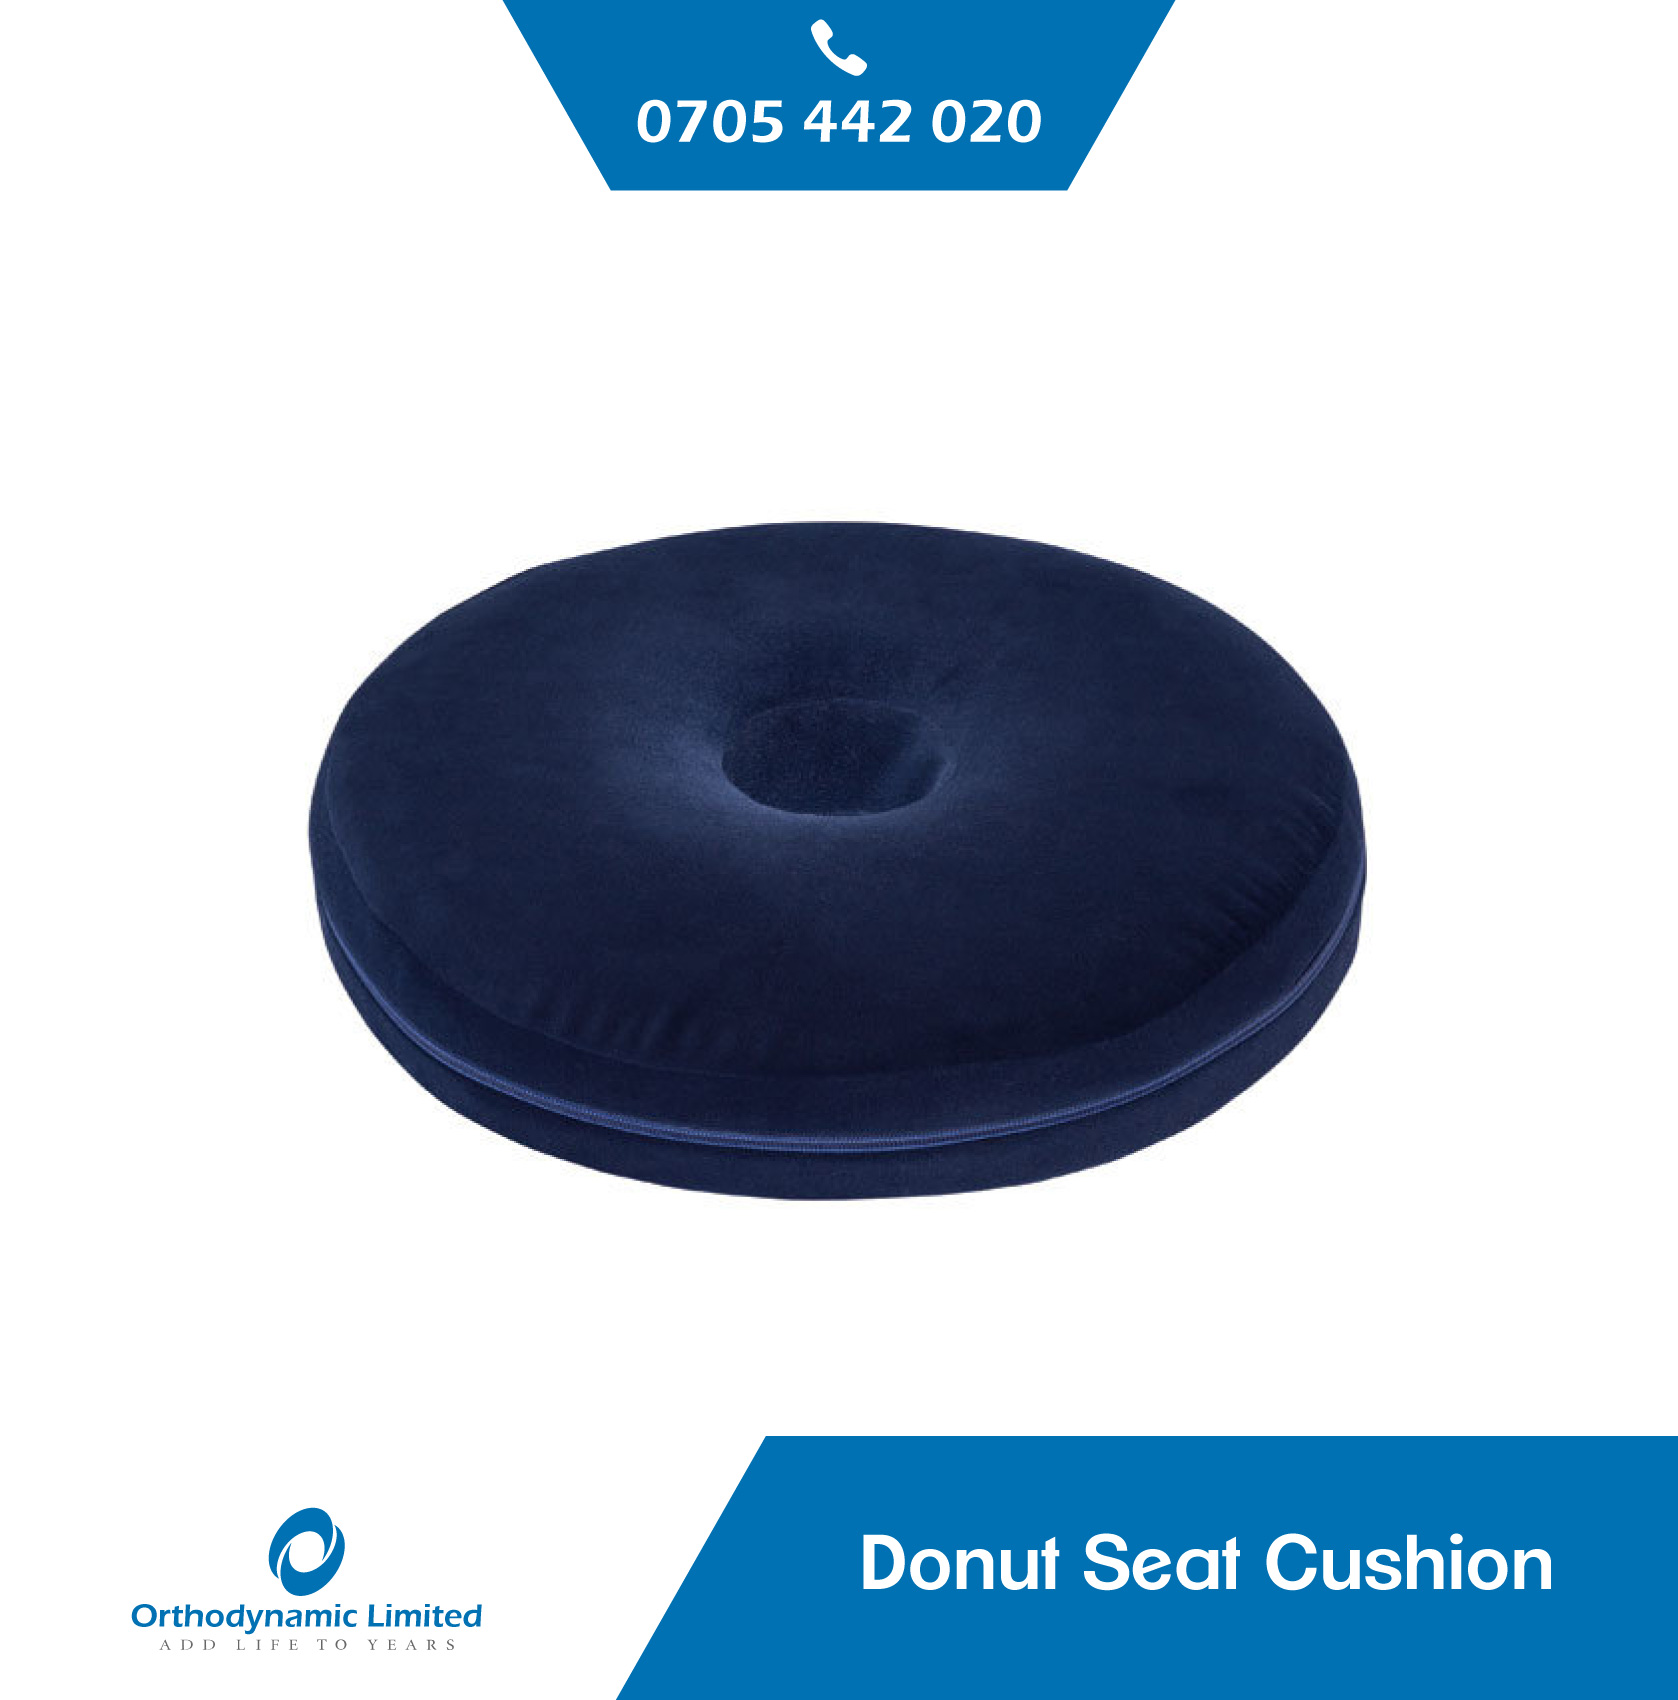 Doughnut seat cushion